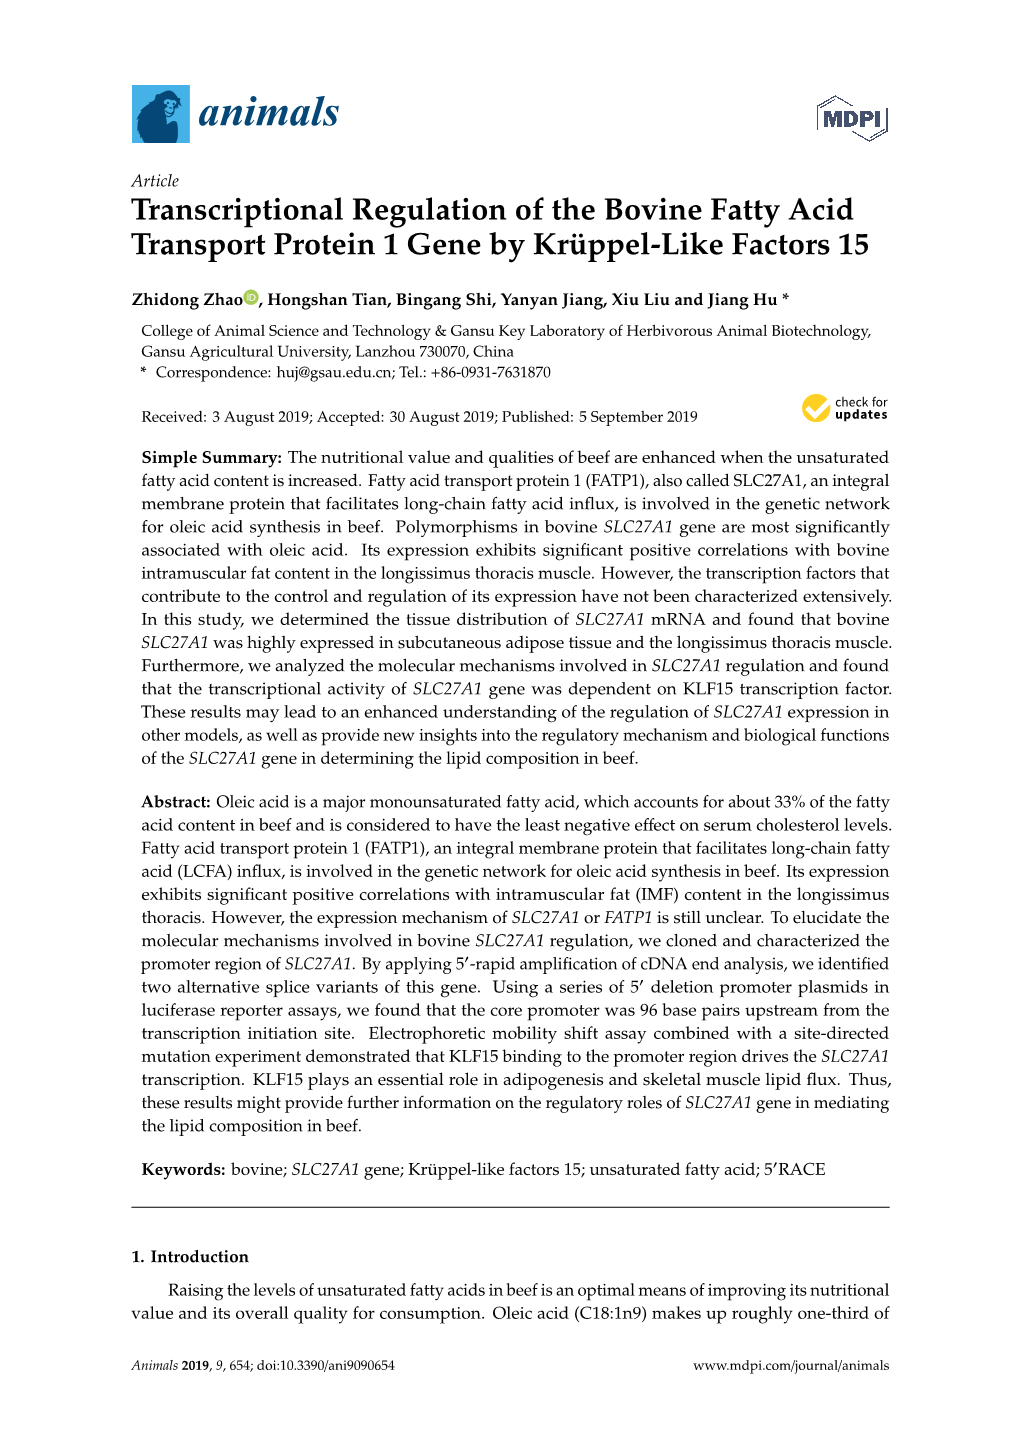 Transcriptional Regulation of the Bovine Fatty Acid Transport Protein 1 Gene by Krüppel-Like Factors 15